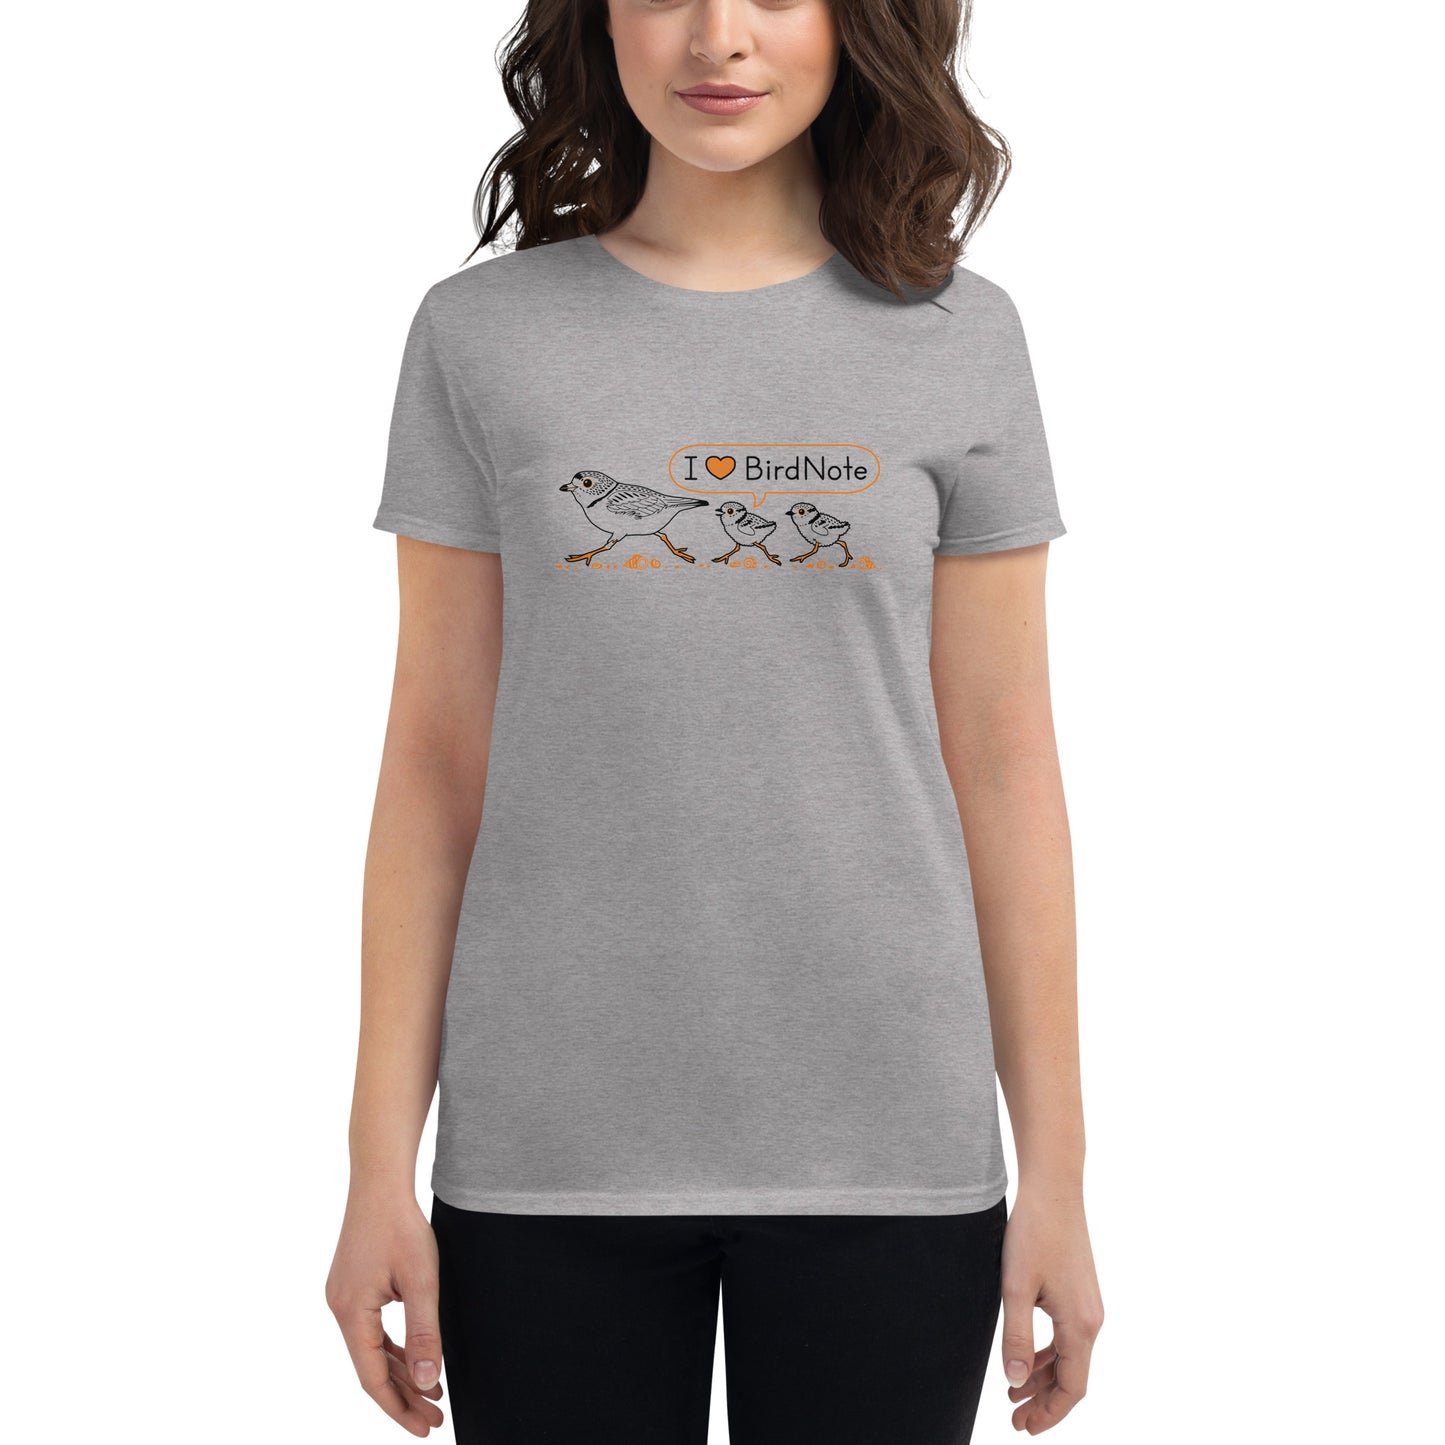 "I Love BirdNote" Fitted Short Sleeve T-Shirt